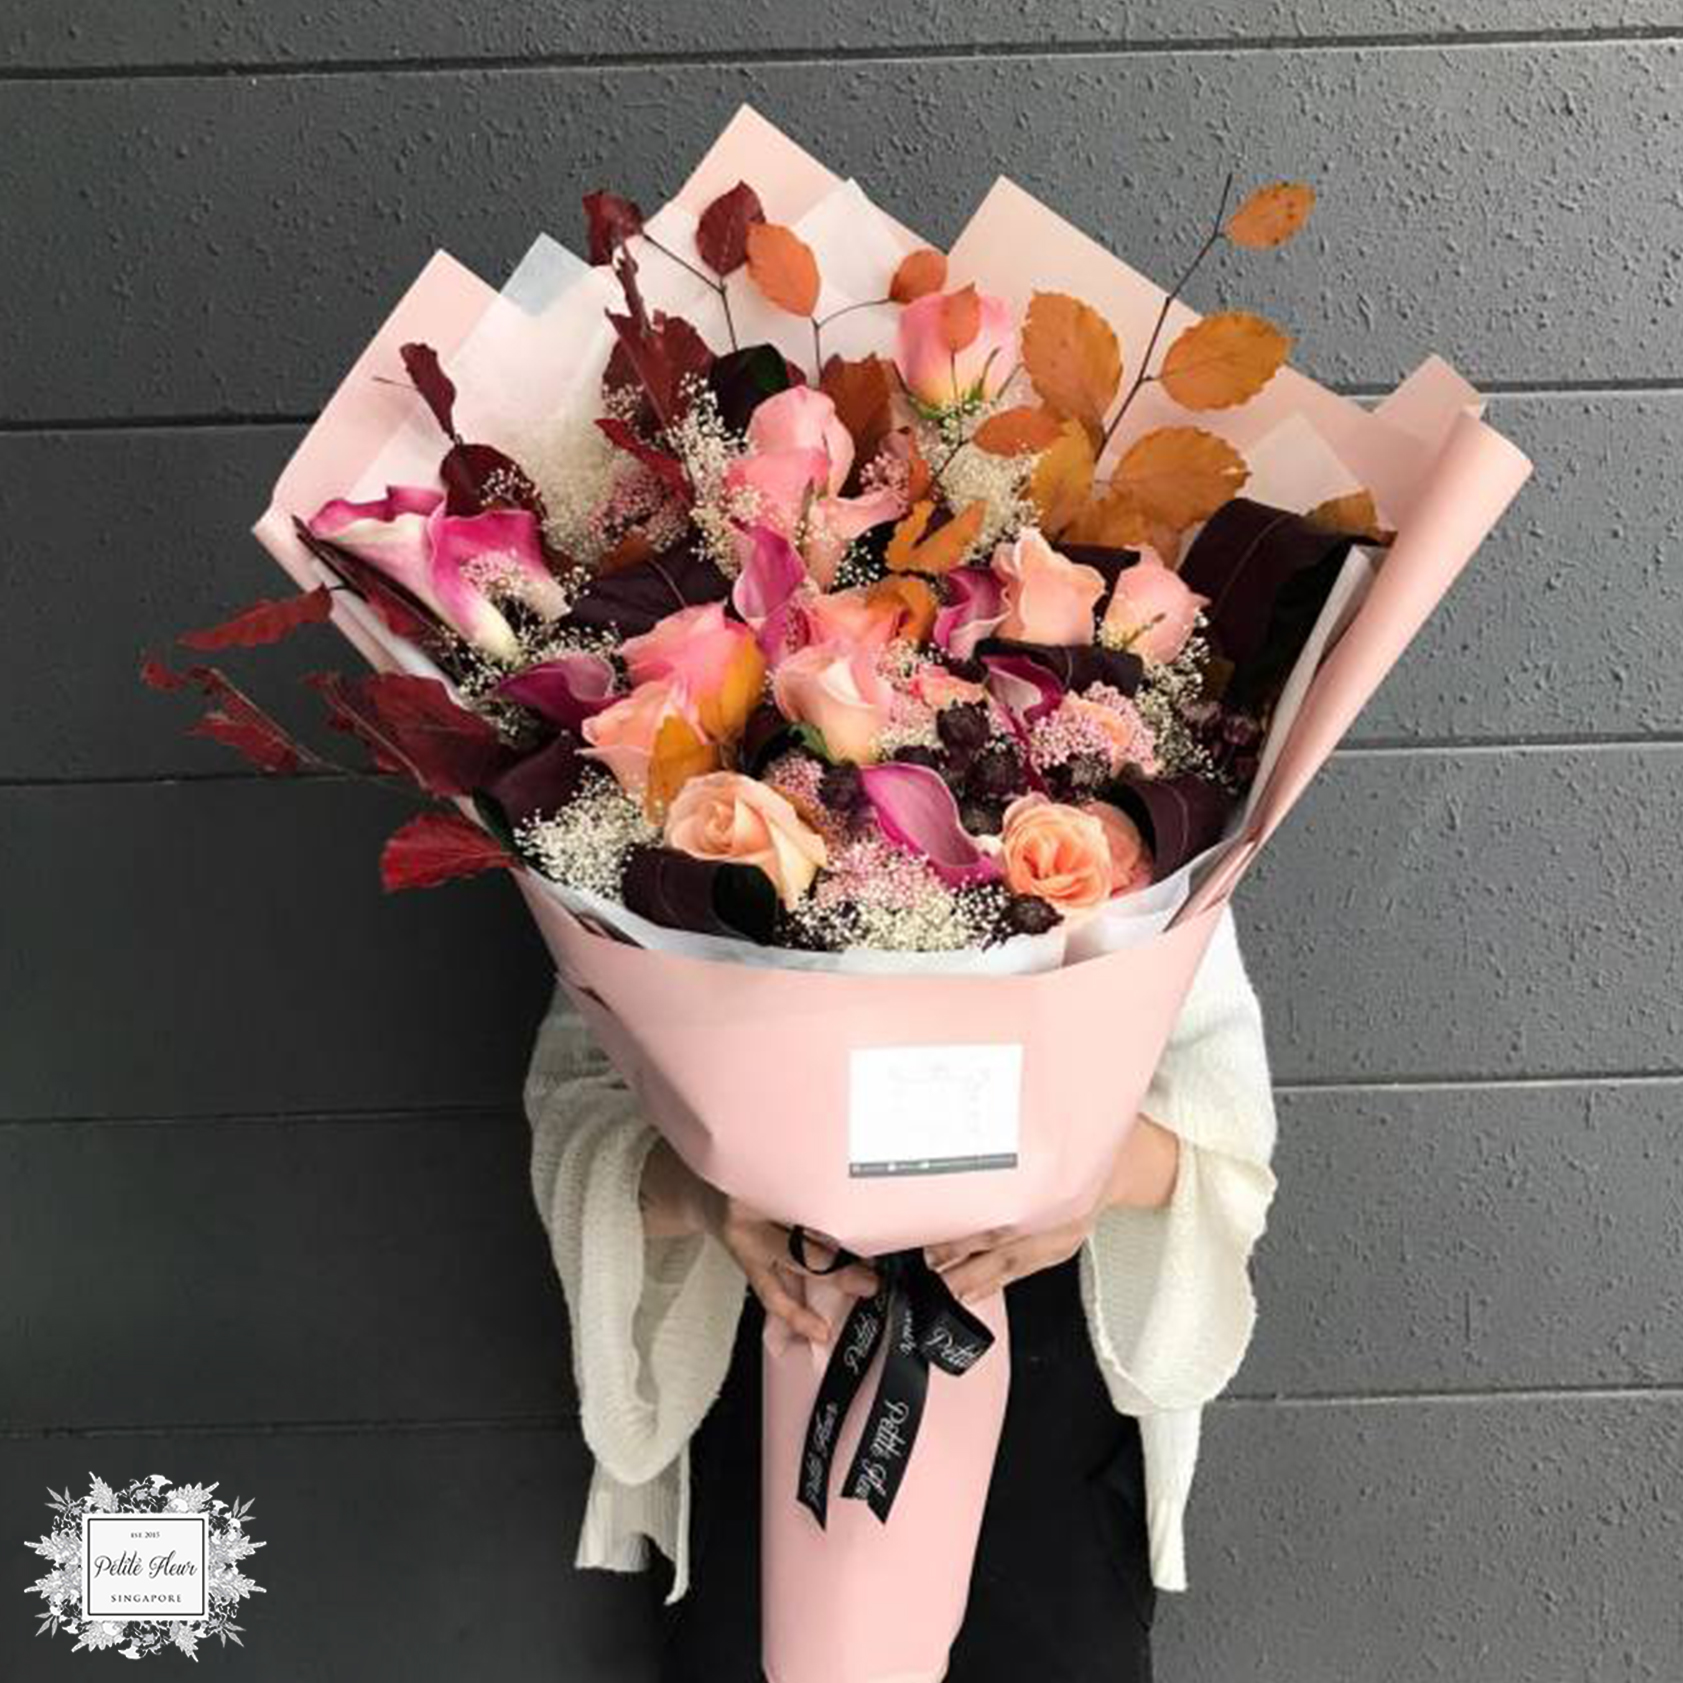 Flower-deliver-singapore